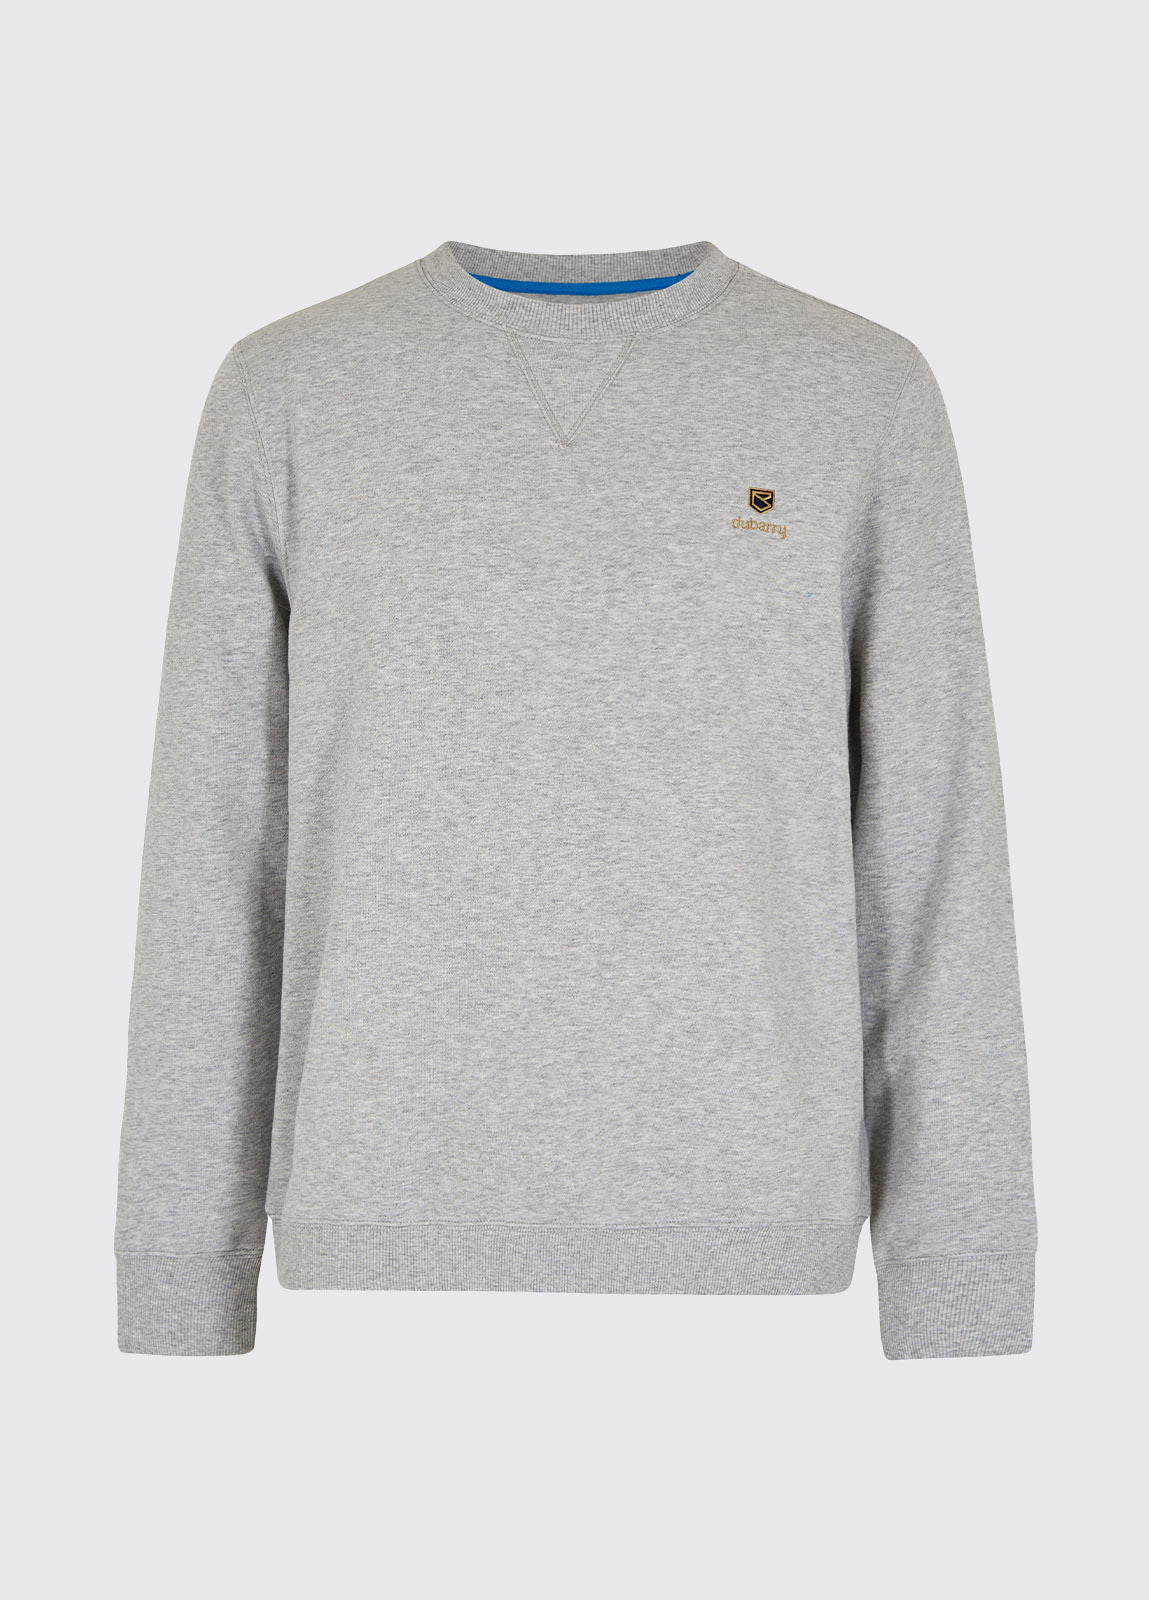 Spencer Sweatshirt Grey Marl